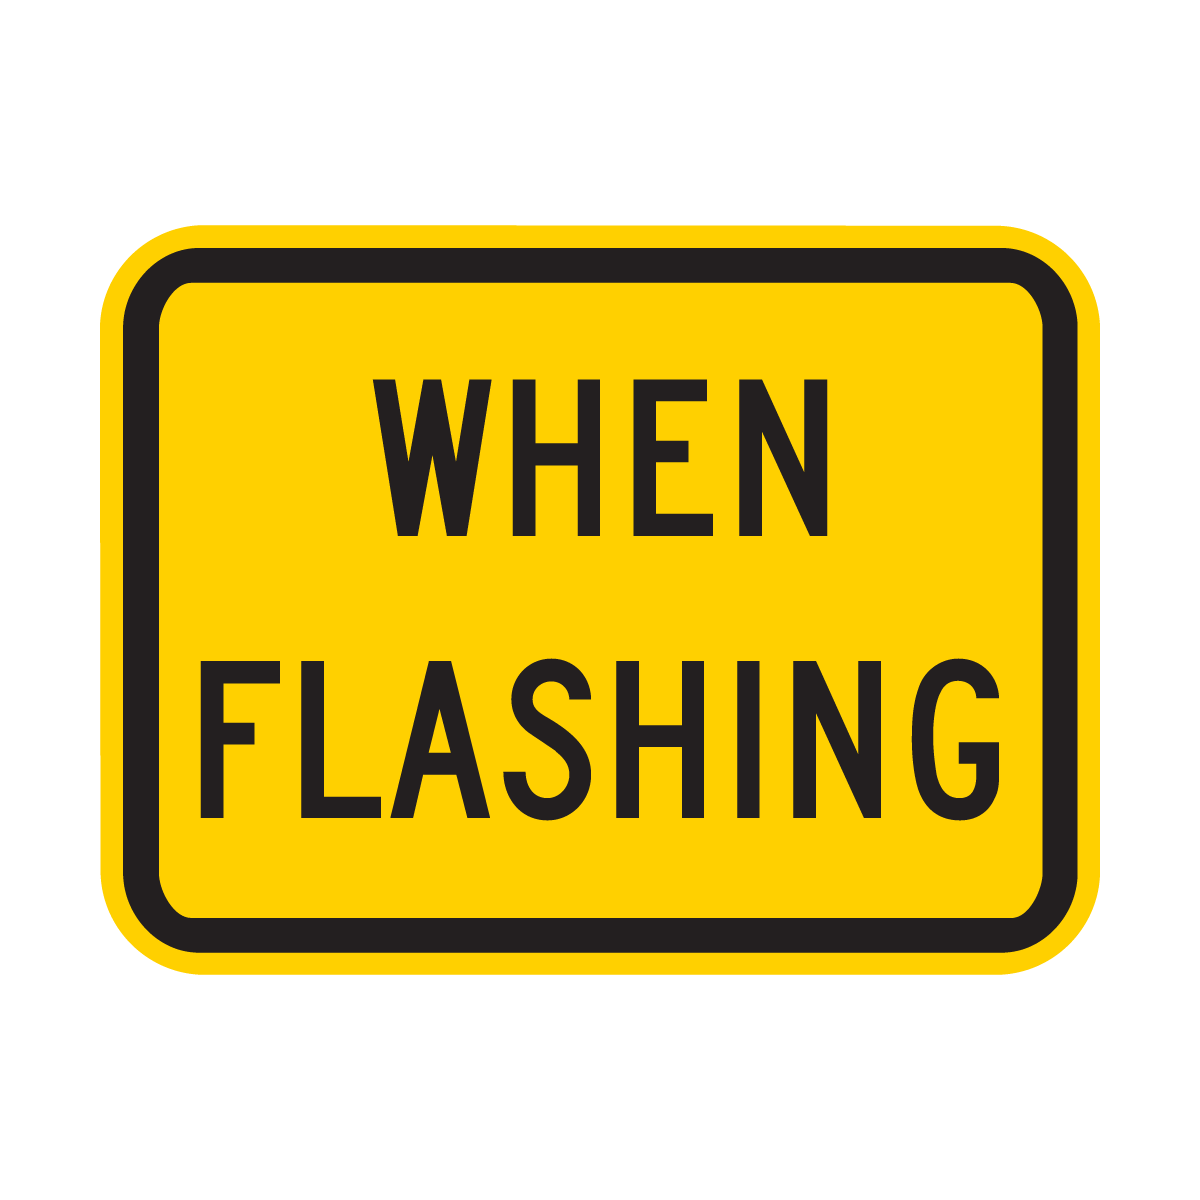 W16-13P When Flashing (plaque)